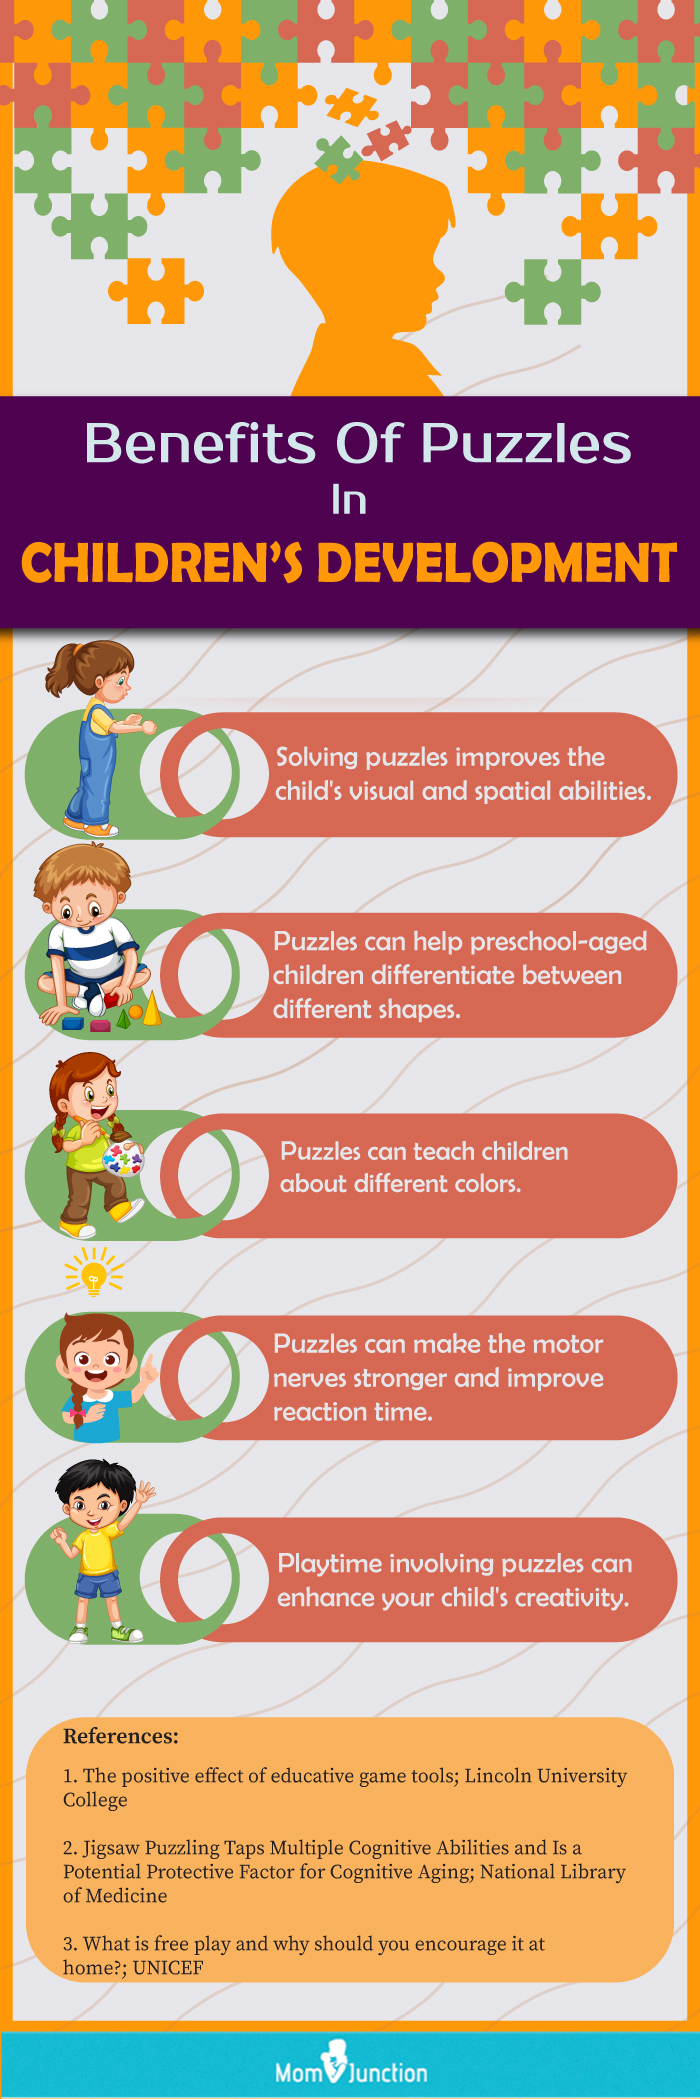 Benefits Of Puzzles In Children's Development